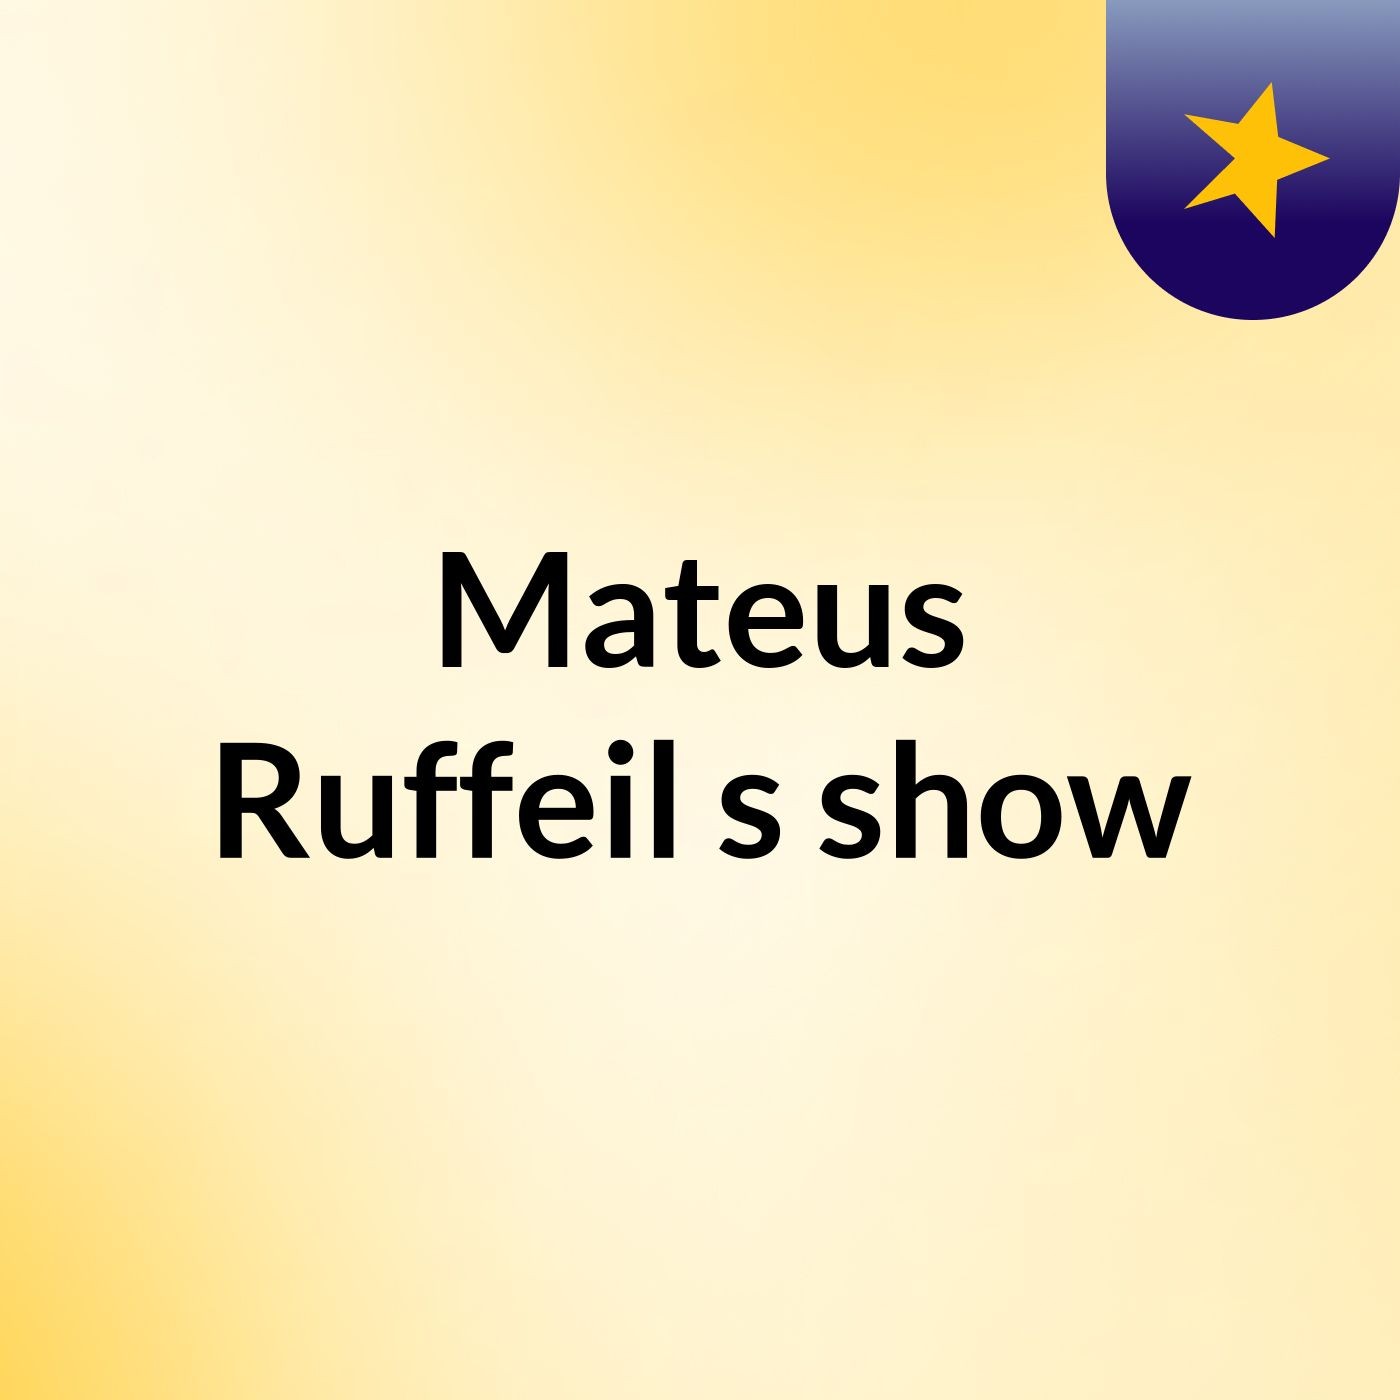 Mateus Ruffeil's show